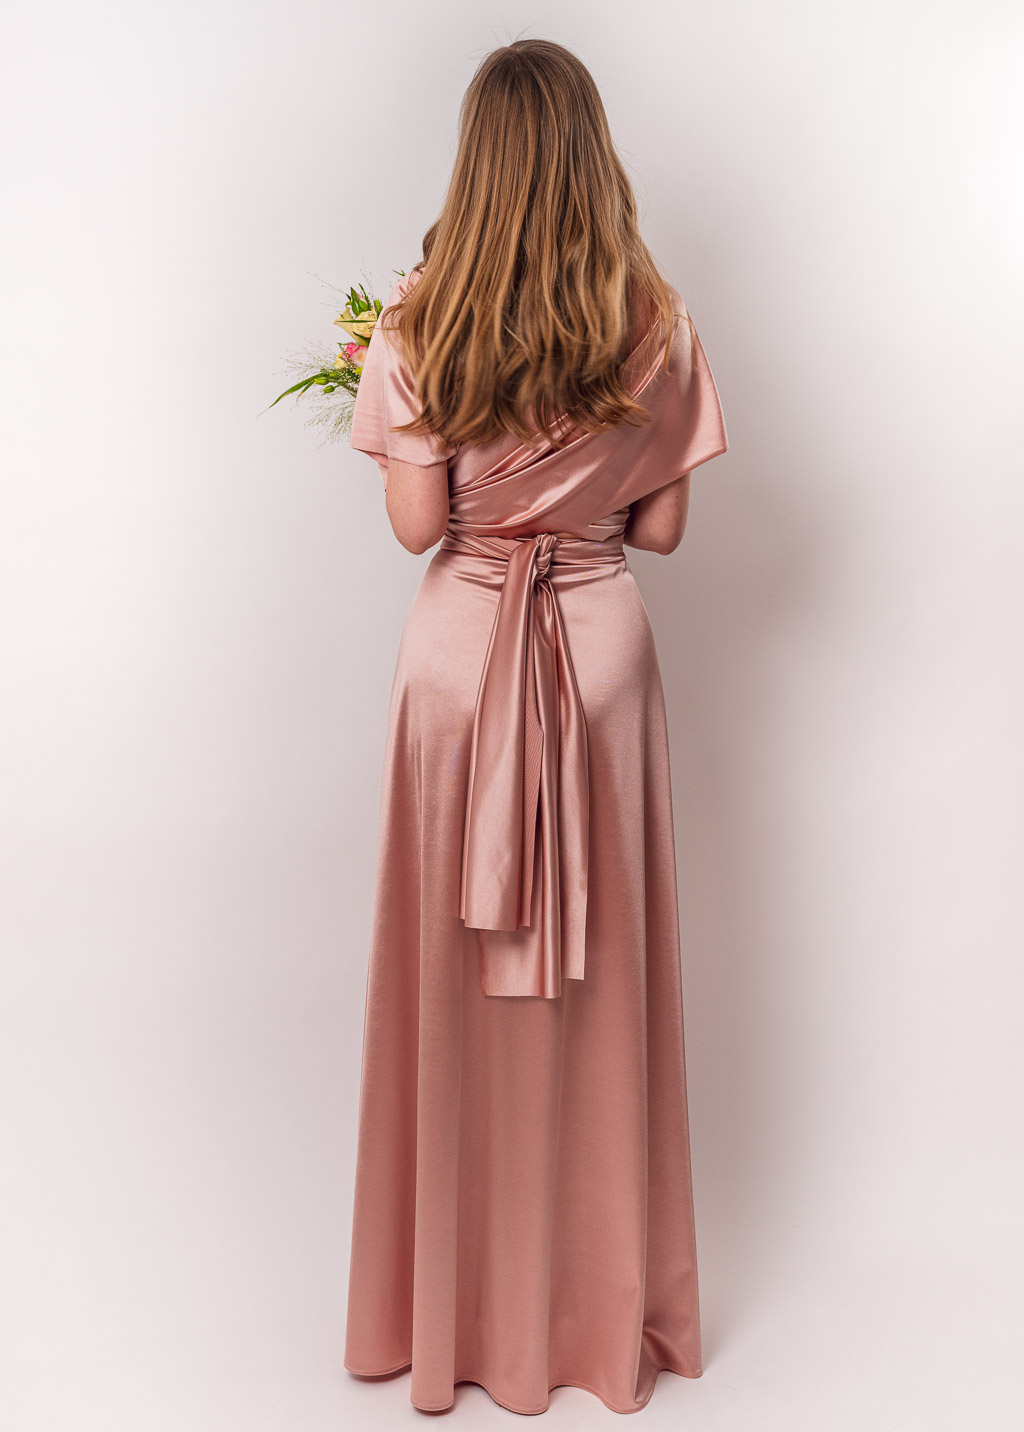 Blush pink luxury satin infinity dress or jumpsuit